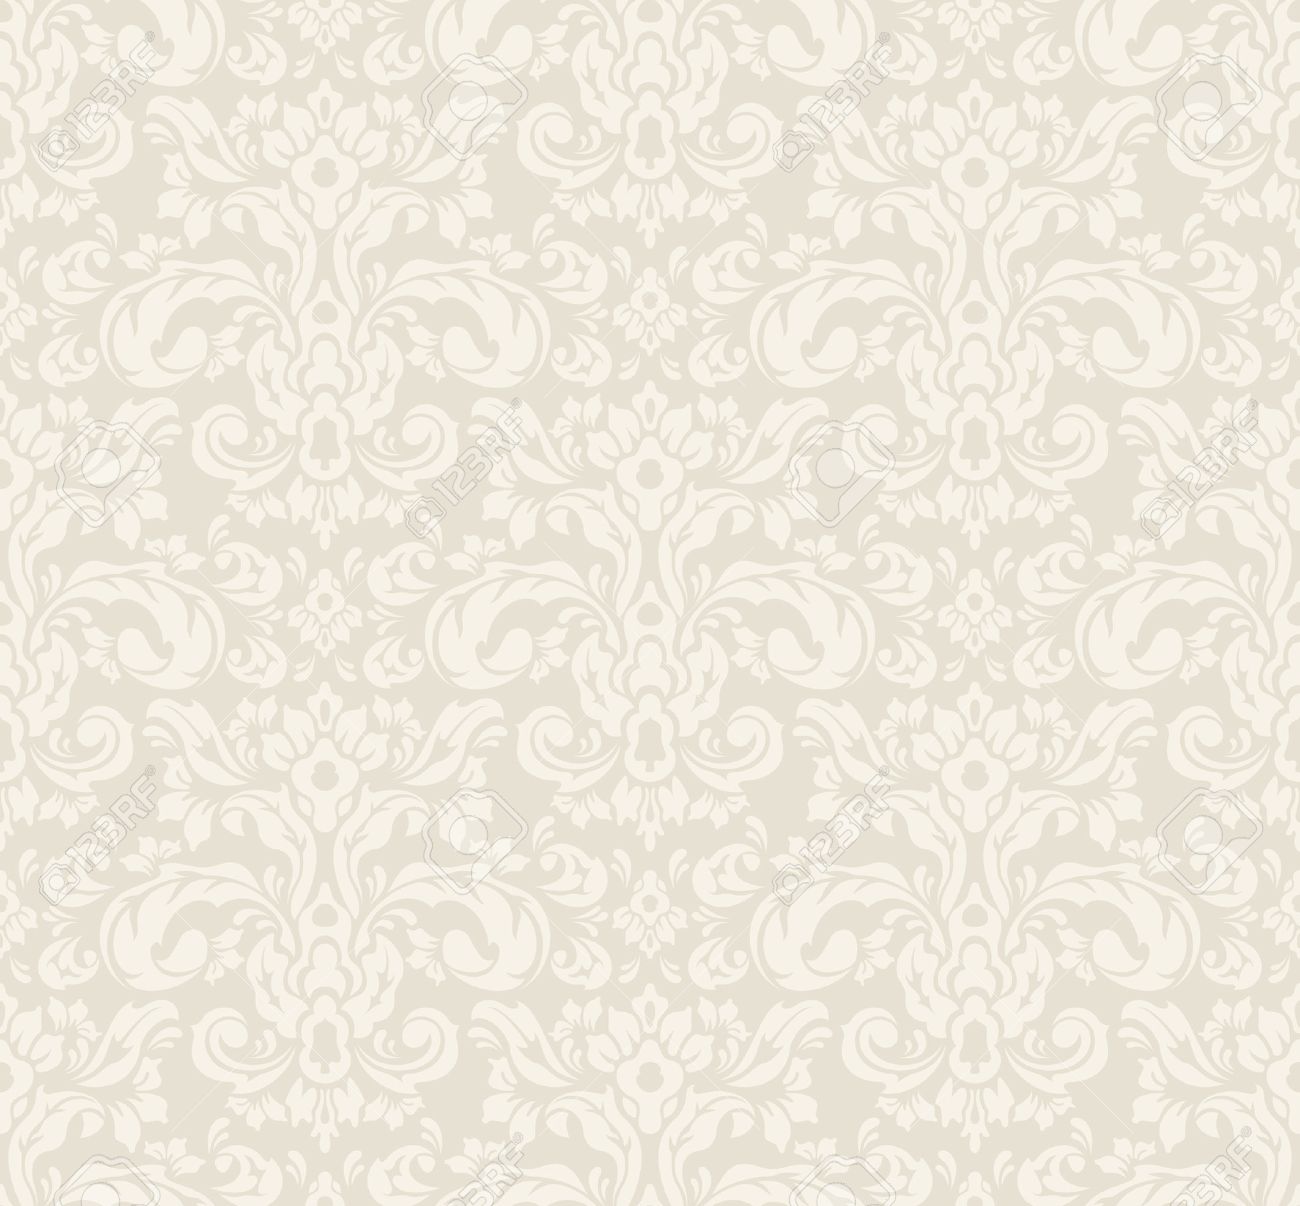 Beige Seamless Vintage Floral Wallpaper Pattern Vector Format